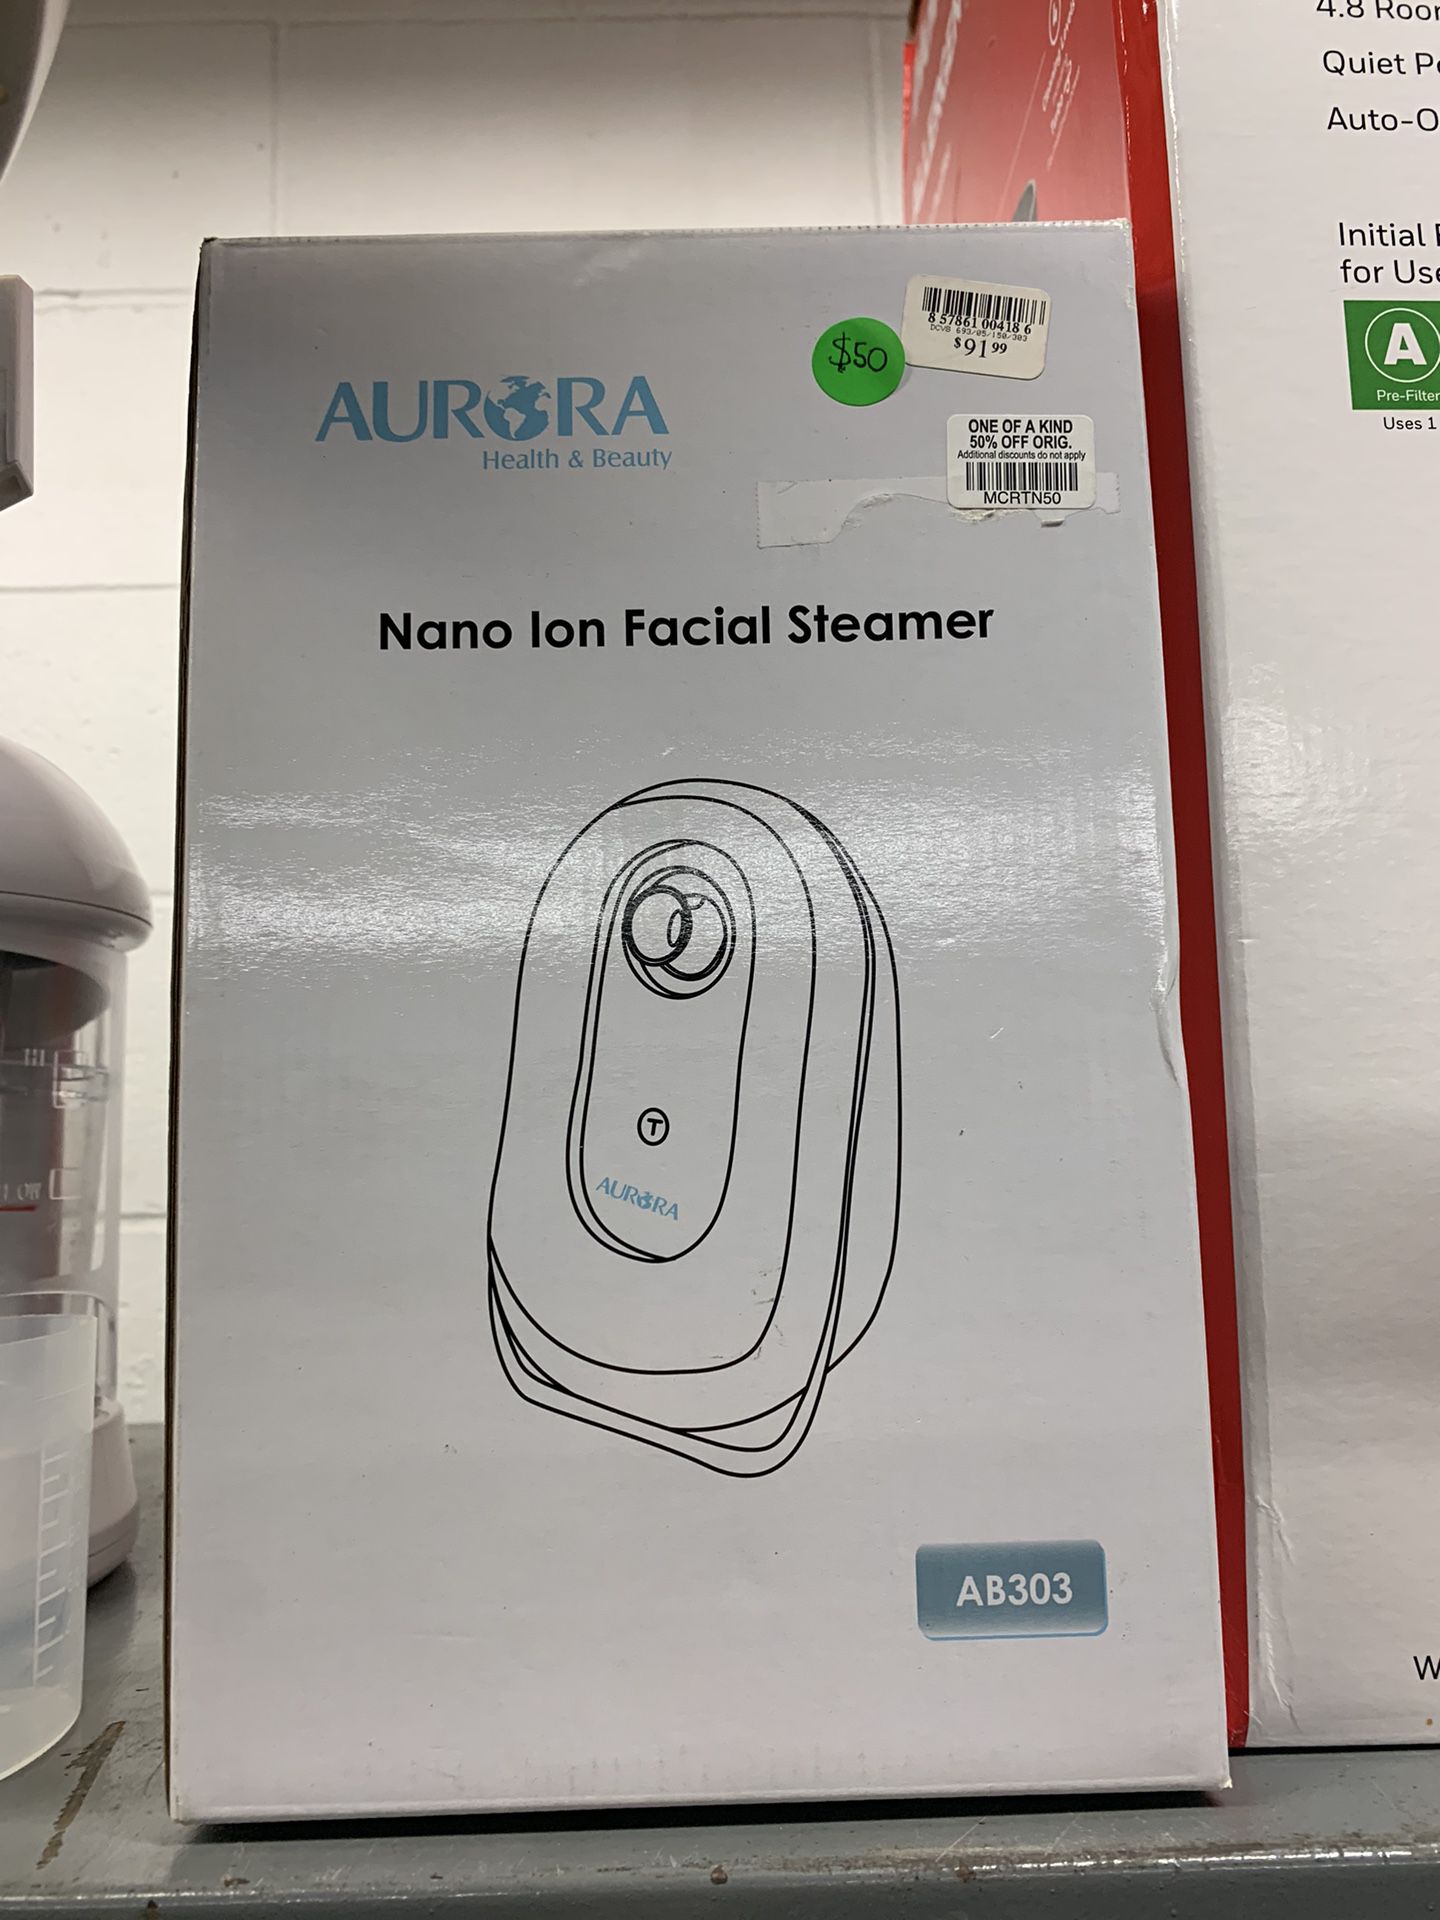 AURORA Nano Ion Facial Steamer